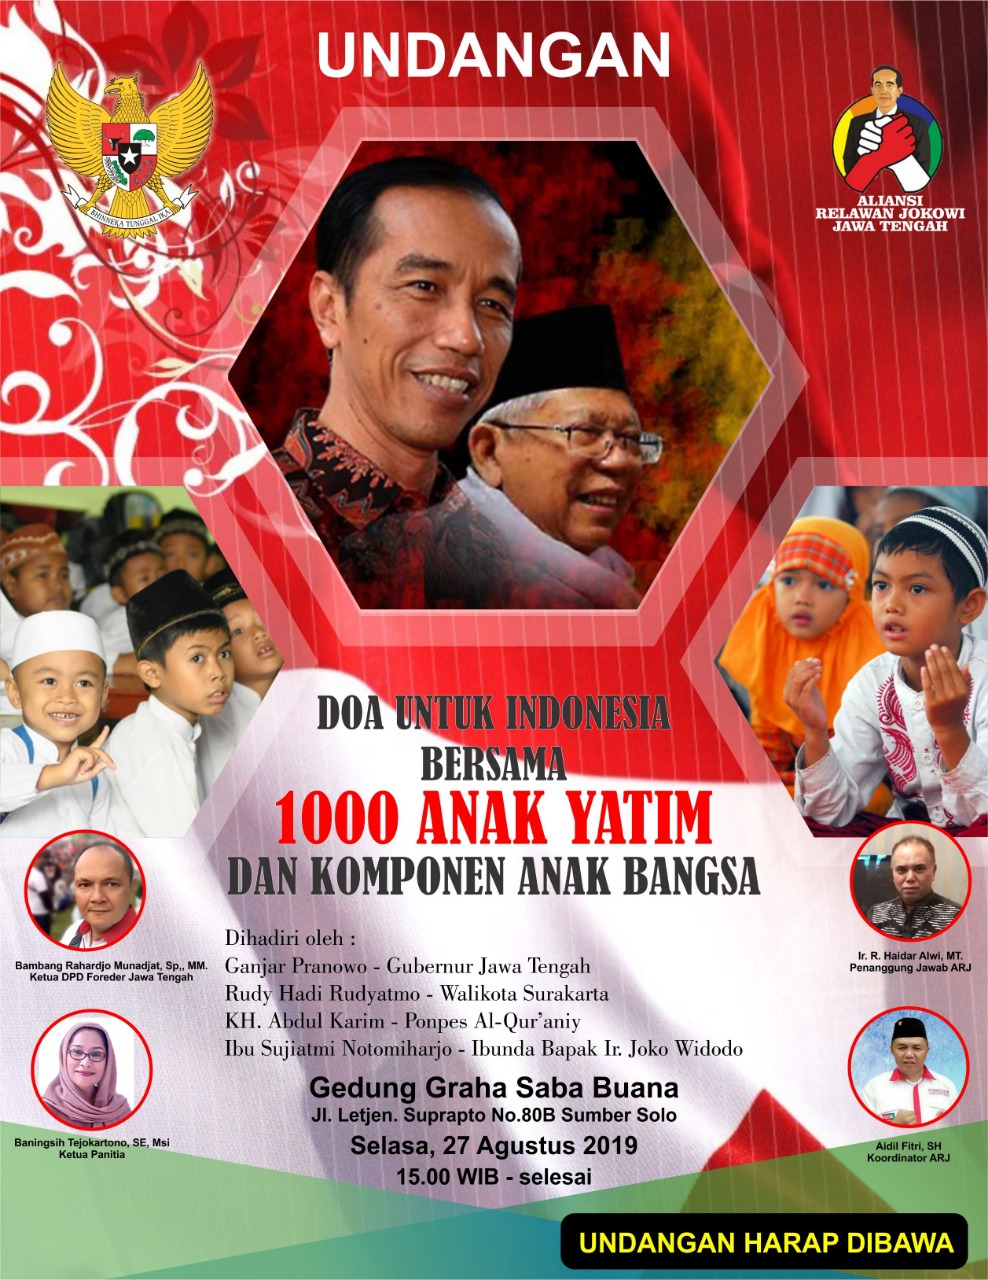 Doa Untuk Indonesia Bersama 1000 Anak Yatim Dan Komponen Anak